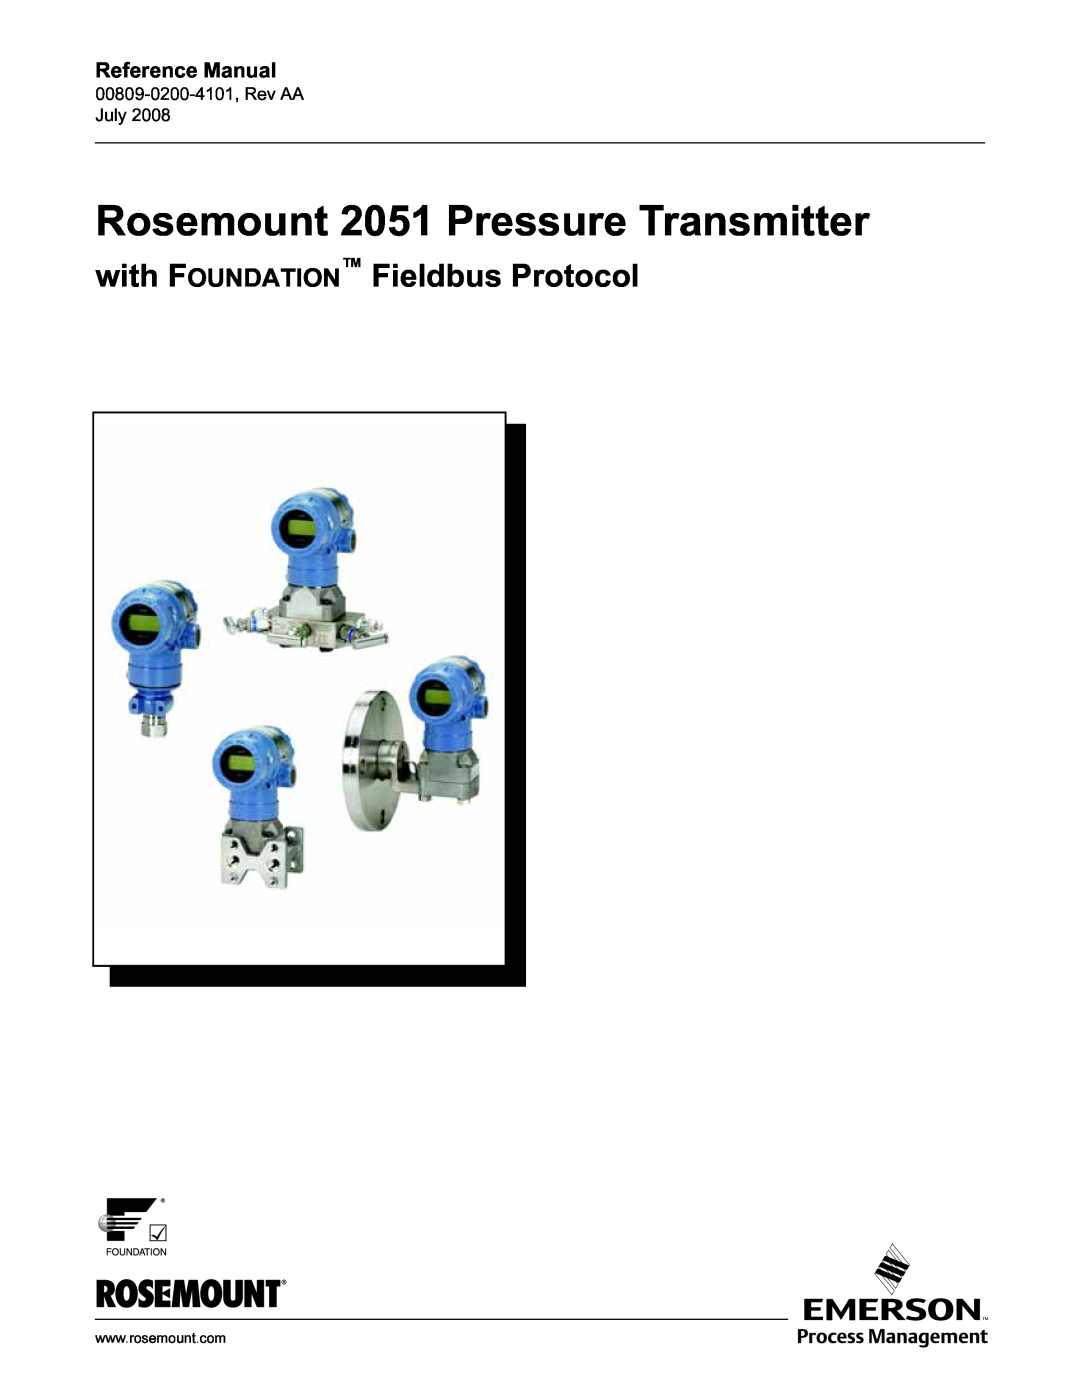 Emerson Process Management manual Rosemount 2051 Pressure Transmitter, Rosemount 2051CF Series Flowmeter Transmitter 